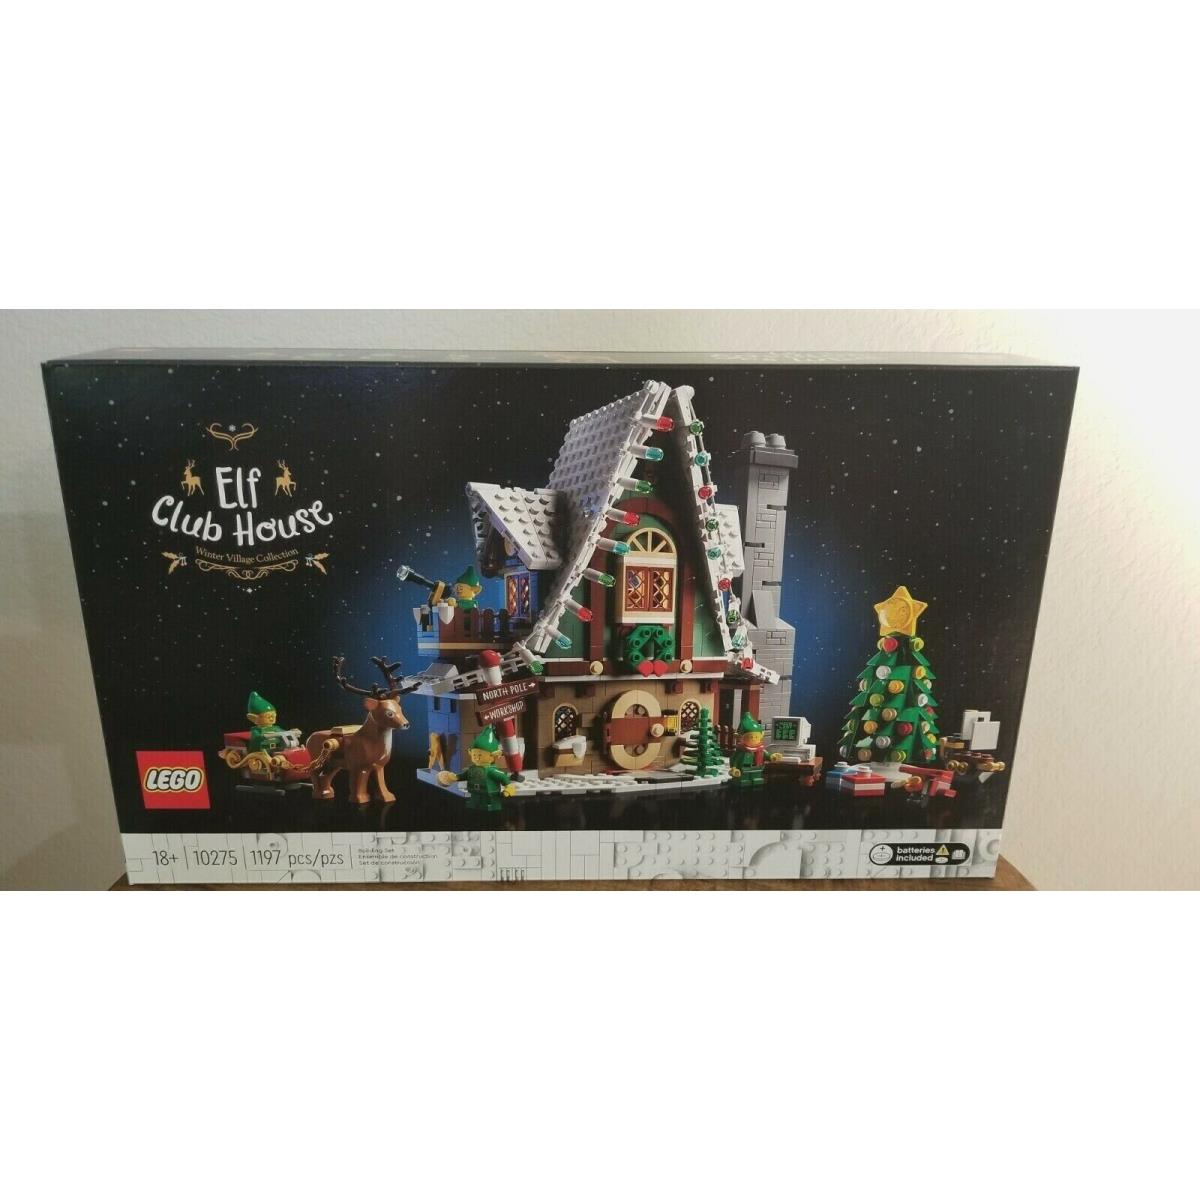 Lego 10275 Creator Elf Club House 1197 Piece Building Set - IN Hand